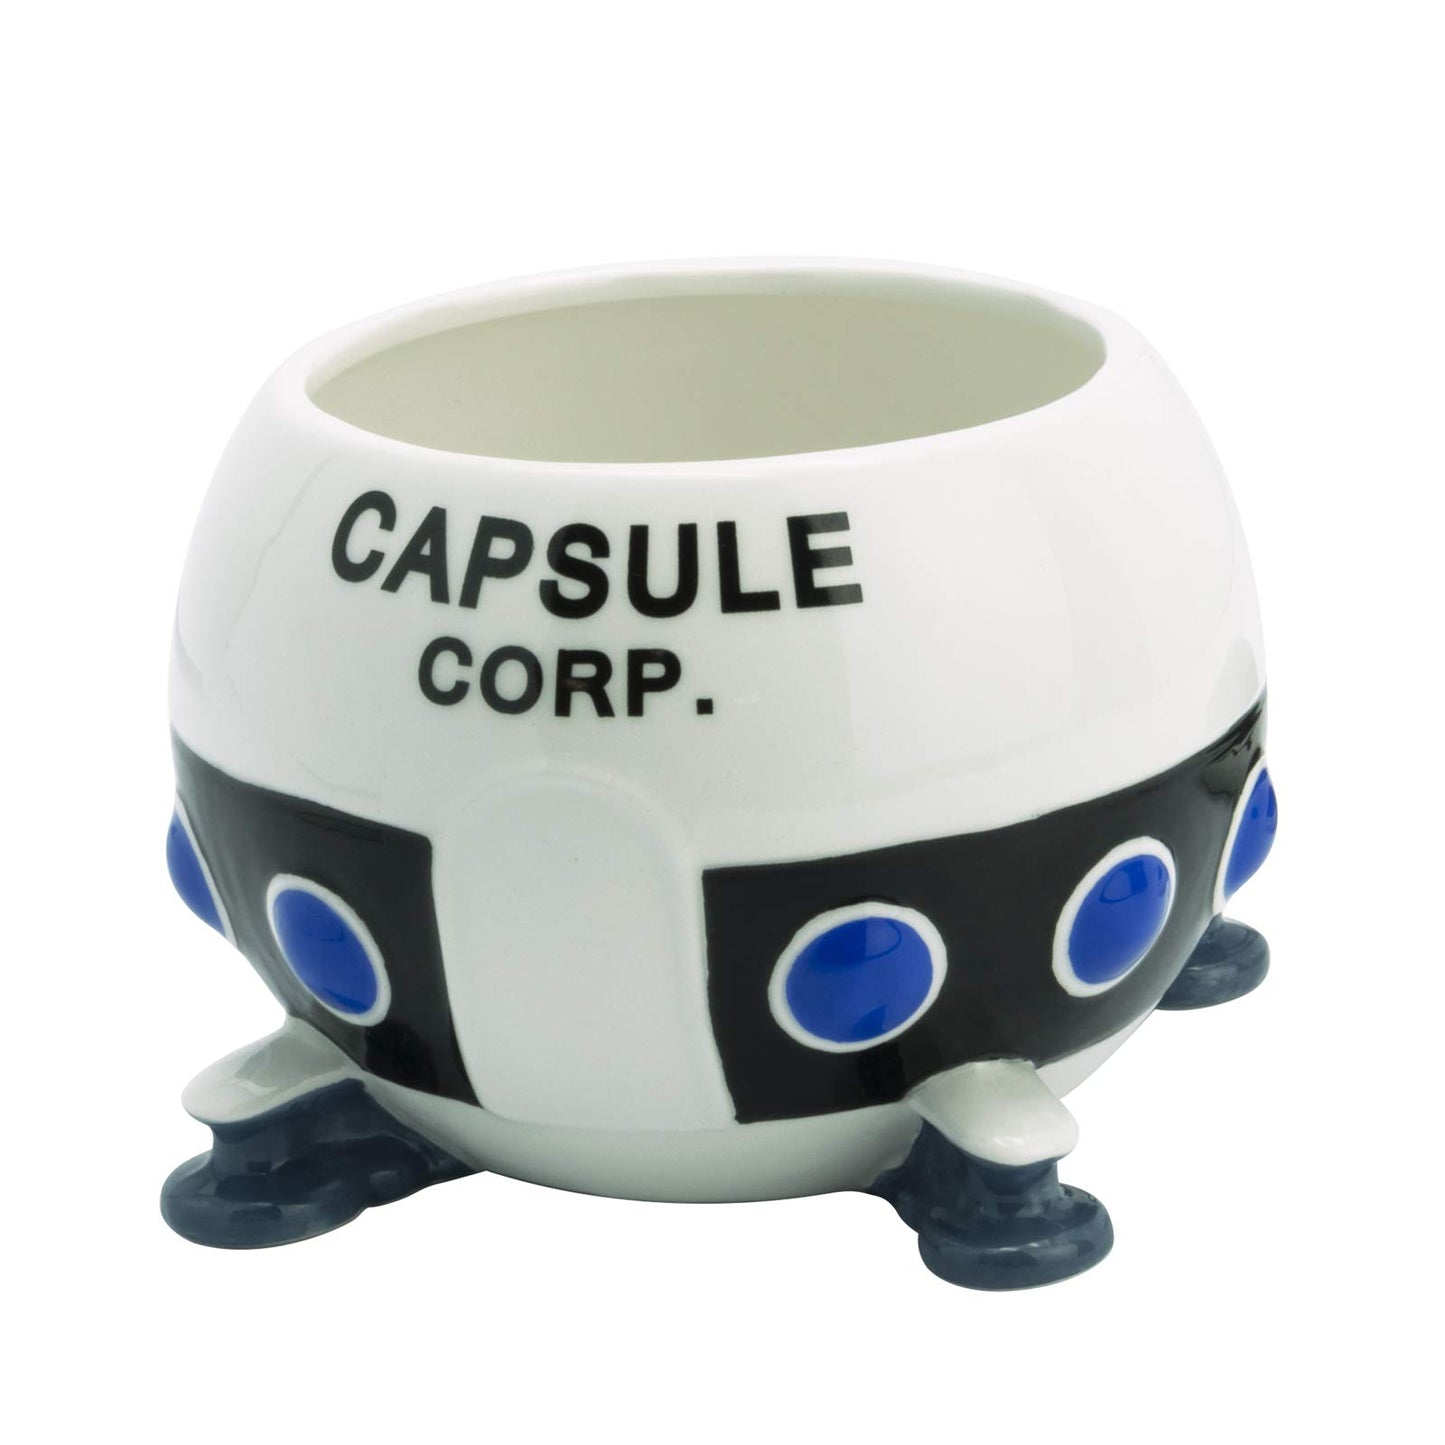 Dragon Ball Z Capsule Corp. 3D Mug